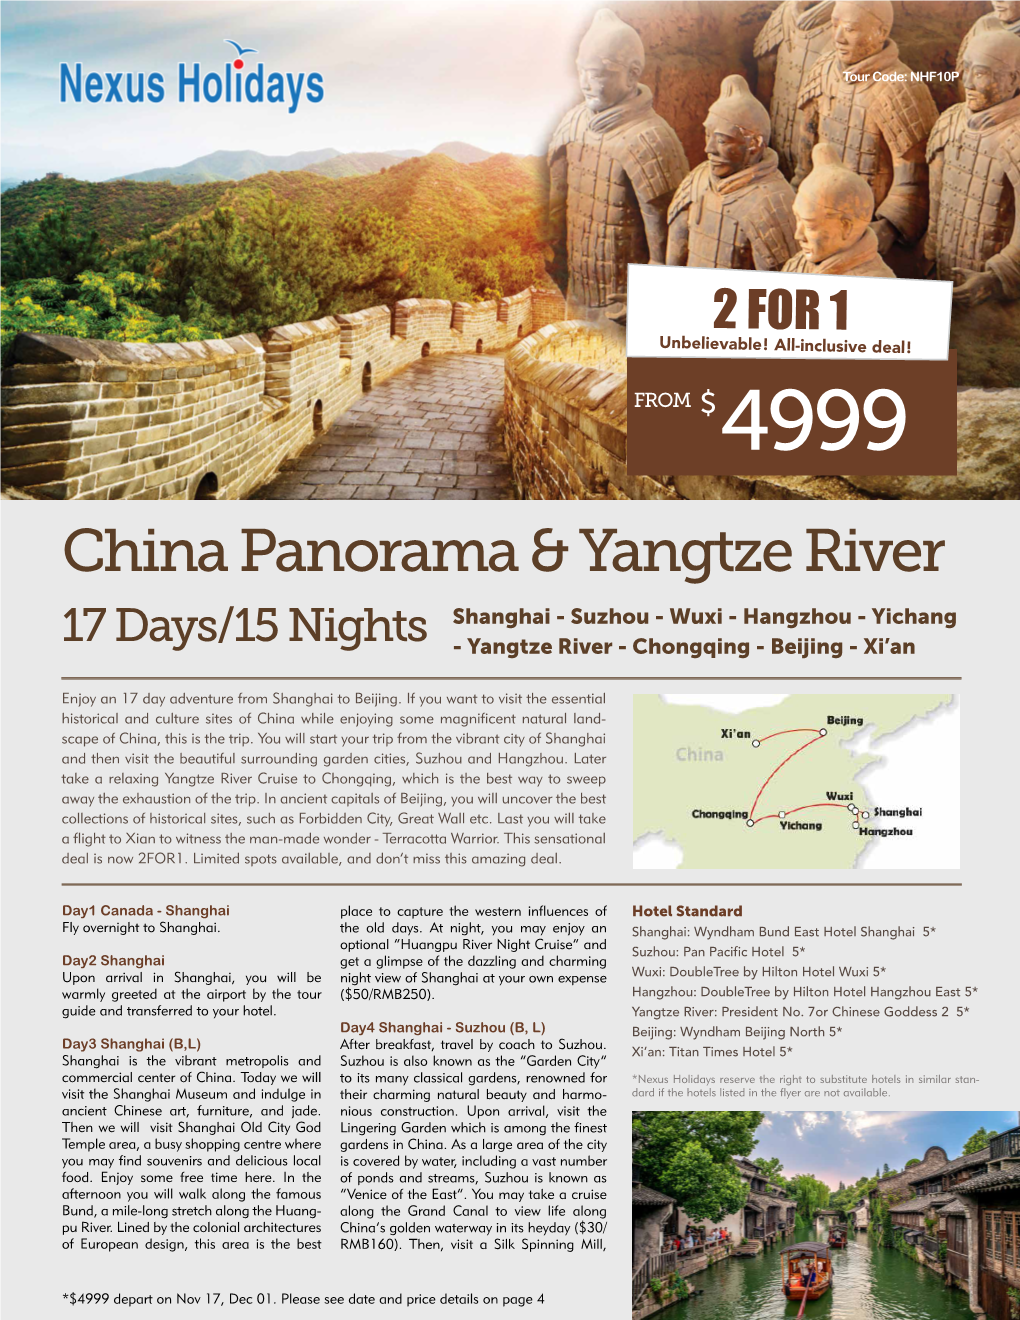 China Panorama & Yangtze River